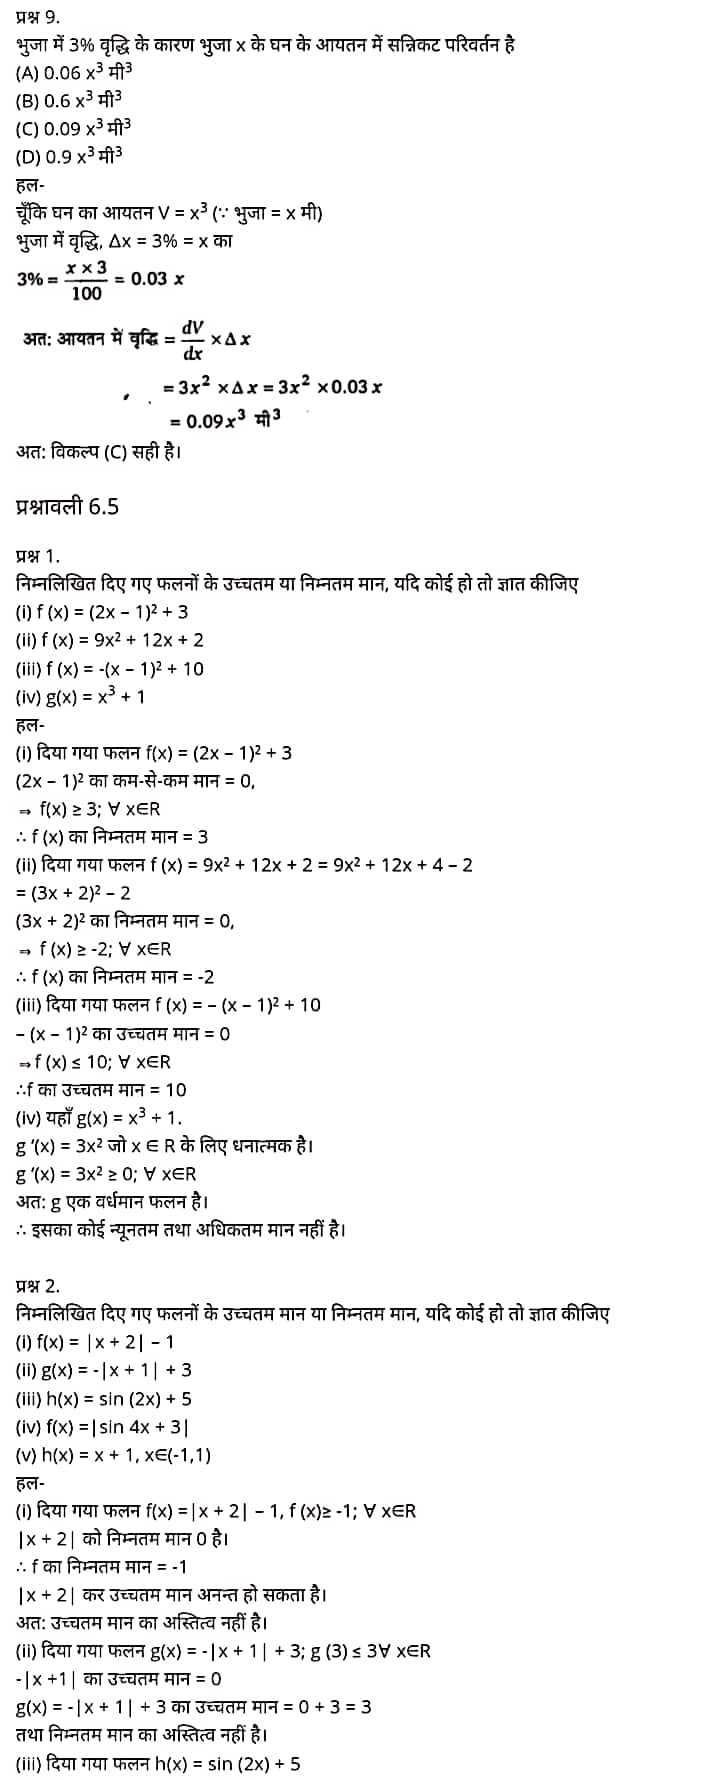 "Class 12 Maths Chapter 6", "Application of Derivatives", Hindi Medium,  मैथ्स कक्षा 12 नोट्स pdf,  मैथ्स कक्षा 12 नोट्स 2020 NCERT,  मैथ्स कक्षा 12 PDF,  मैथ्स पुस्तक,  मैथ्स की बुक,  मैथ्स प्रश्नोत्तरी Class 12, 12 वीं मैथ्स पुस्तक RBSE,  बिहार बोर्ड 12 वीं मैथ्स नोट्स,   12th Maths book in hindi, 12th Maths notes in hindi, cbse books for class 12, cbse books in hindi, cbse ncert books, class 12 Maths notes in hindi,  class 12 hindi ncert solutions, Maths 2020, Maths 2021, Maths 2022, Maths book class 12, Maths book in hindi, Maths class 12 in hindi, Maths notes for class 12 up board in hindi, ncert all books, ncert app in hindi, ncert book solution, ncert books class 10, ncert books class 12, ncert books for class 7, ncert books for upsc in hindi, ncert books in hindi class 10, ncert books in hindi for class 12 Maths, ncert books in hindi for class 6, ncert books in hindi pdf, ncert class 12 hindi book, ncert english book, ncert Maths book in hindi, ncert Maths books in hindi pdf, ncert Maths class 12, ncert in hindi,  old ncert books in hindi, online ncert books in hindi,  up board 12th, up board 12th syllabus, up board class 10 hindi book, up board class 12 books, up board class 12 new syllabus, up Board Maths 2020, up Board Maths 2021, up Board Maths 2022, up Board Maths 2023, up board intermediate Maths syllabus, up board intermediate syllabus 2021, Up board Master 2021, up board model paper 2021, up board model paper all subject, up board new syllabus of class 12th Maths, up board paper 2021, Up board syllabus 2021, UP board syllabus 2022, 12 वीं मैथ्स पुस्तक हिंदी में, 12 वीं मैथ्स नोट्स हिंदी में, कक्षा 12 के लिए सीबीएससी पुस्तकें, हिंदी में सीबीएससी पुस्तकें, सीबीएससी  पुस्तकें, कक्षा 12 मैथ्स नोट्स हिंदी में, कक्षा 12 हिंदी एनसीईआरटी समाधान, मैथ्स 2020, मैथ्स 2021, मैथ्स 2022, मैथ्स  बुक क्लास 12, मैथ्स बुक इन हिंदी, बायोलॉजी क्लास 12 हिंदी में, मैथ्स नोट्स इन क्लास 12 यूपी  बोर्ड इन हिंदी, एनसीईआरटी मैथ्स की किताब हिंदी में,  बोर्ड 12 वीं तक, 12 वीं तक की पाठ्यक्रम, बोर्ड कक्षा 10 की हिंदी पुस्तक  , बोर्ड की कक्षा 12 की किताबें, बोर्ड की कक्षा 12 की नई पाठ्यक्रम, बोर्ड मैथ्स 2020, यूपी   बोर्ड मैथ्स 2021, यूपी  बोर्ड मैथ्स 2022, यूपी  बोर्ड मैथ्स 2023, यूपी  बोर्ड इंटरमीडिएट बायोलॉजी सिलेबस, यूपी  बोर्ड इंटरमीडिएट सिलेबस 2021, यूपी  बोर्ड मास्टर 2021, यूपी  बोर्ड मॉडल पेपर 2021, यूपी  मॉडल पेपर सभी विषय, यूपी  बोर्ड न्यू क्लास का सिलेबस  12 वीं मैथ्स, अप बोर्ड पेपर 2021, यूपी बोर्ड सिलेबस 2021, यूपी बोर्ड सिलेबस 2022,